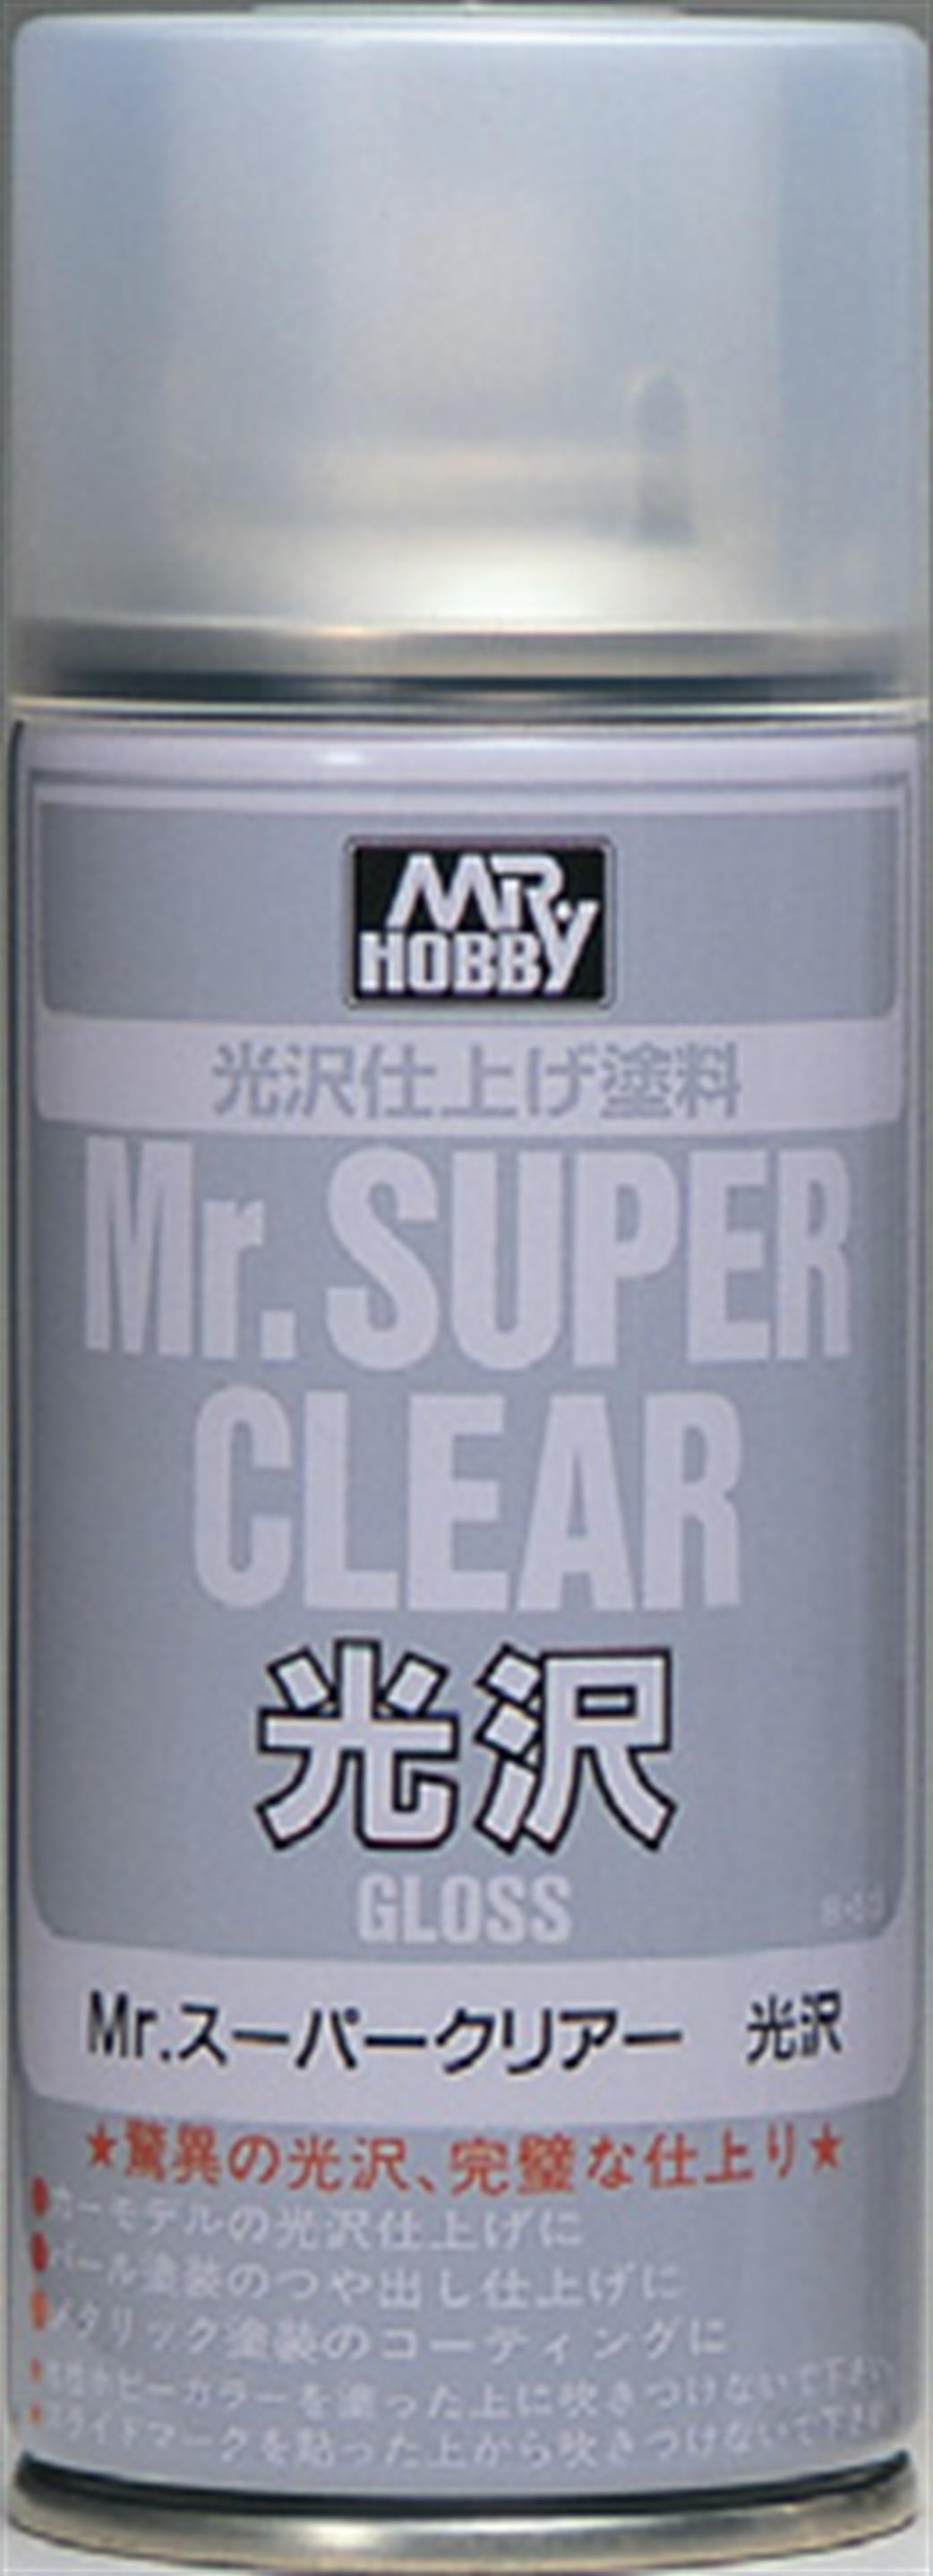 Gunze Sangyo  B-513 Mr Super Clear Gloss